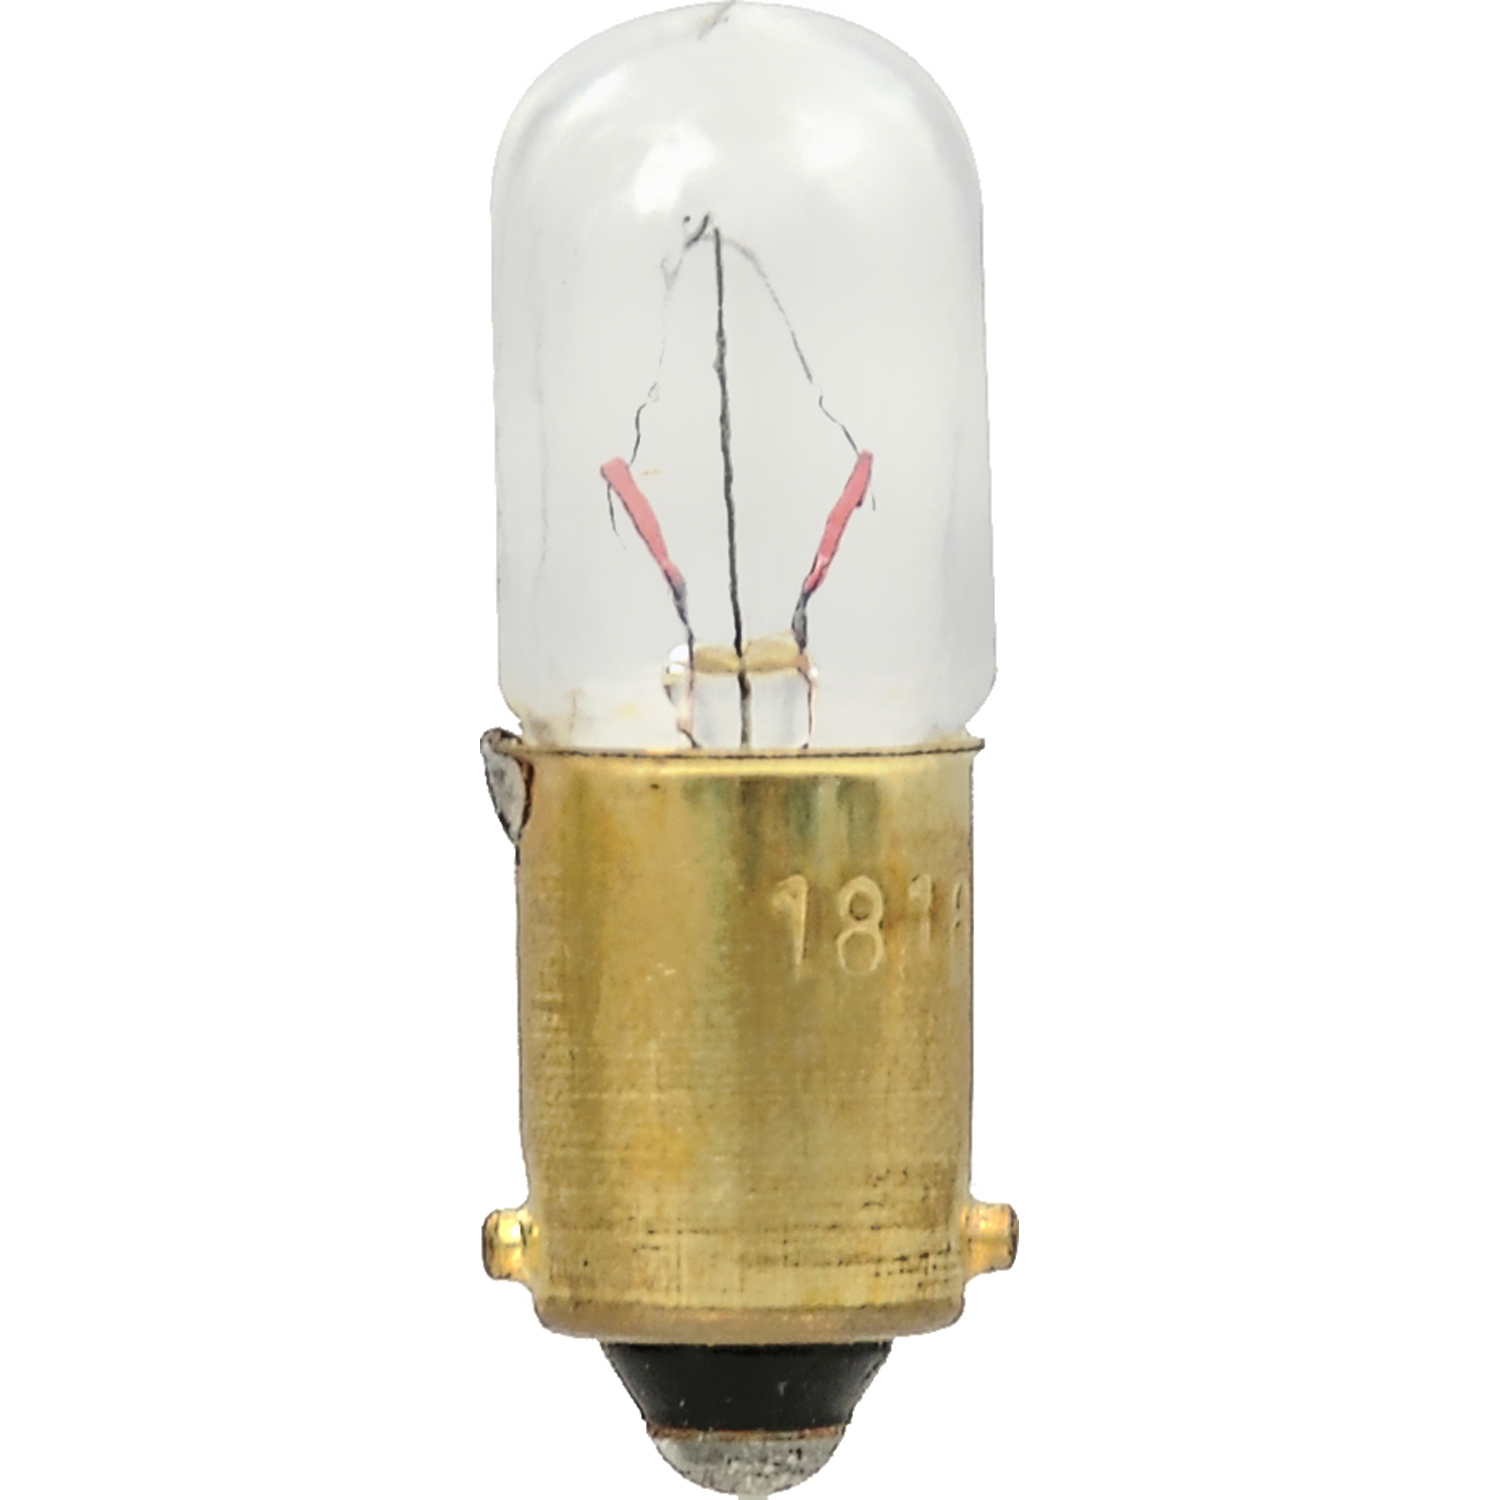 SYLVANIA RETAIL PACKS - 10-Pack Box High Beam Indicator Light Bulb - SYR 1816.TP